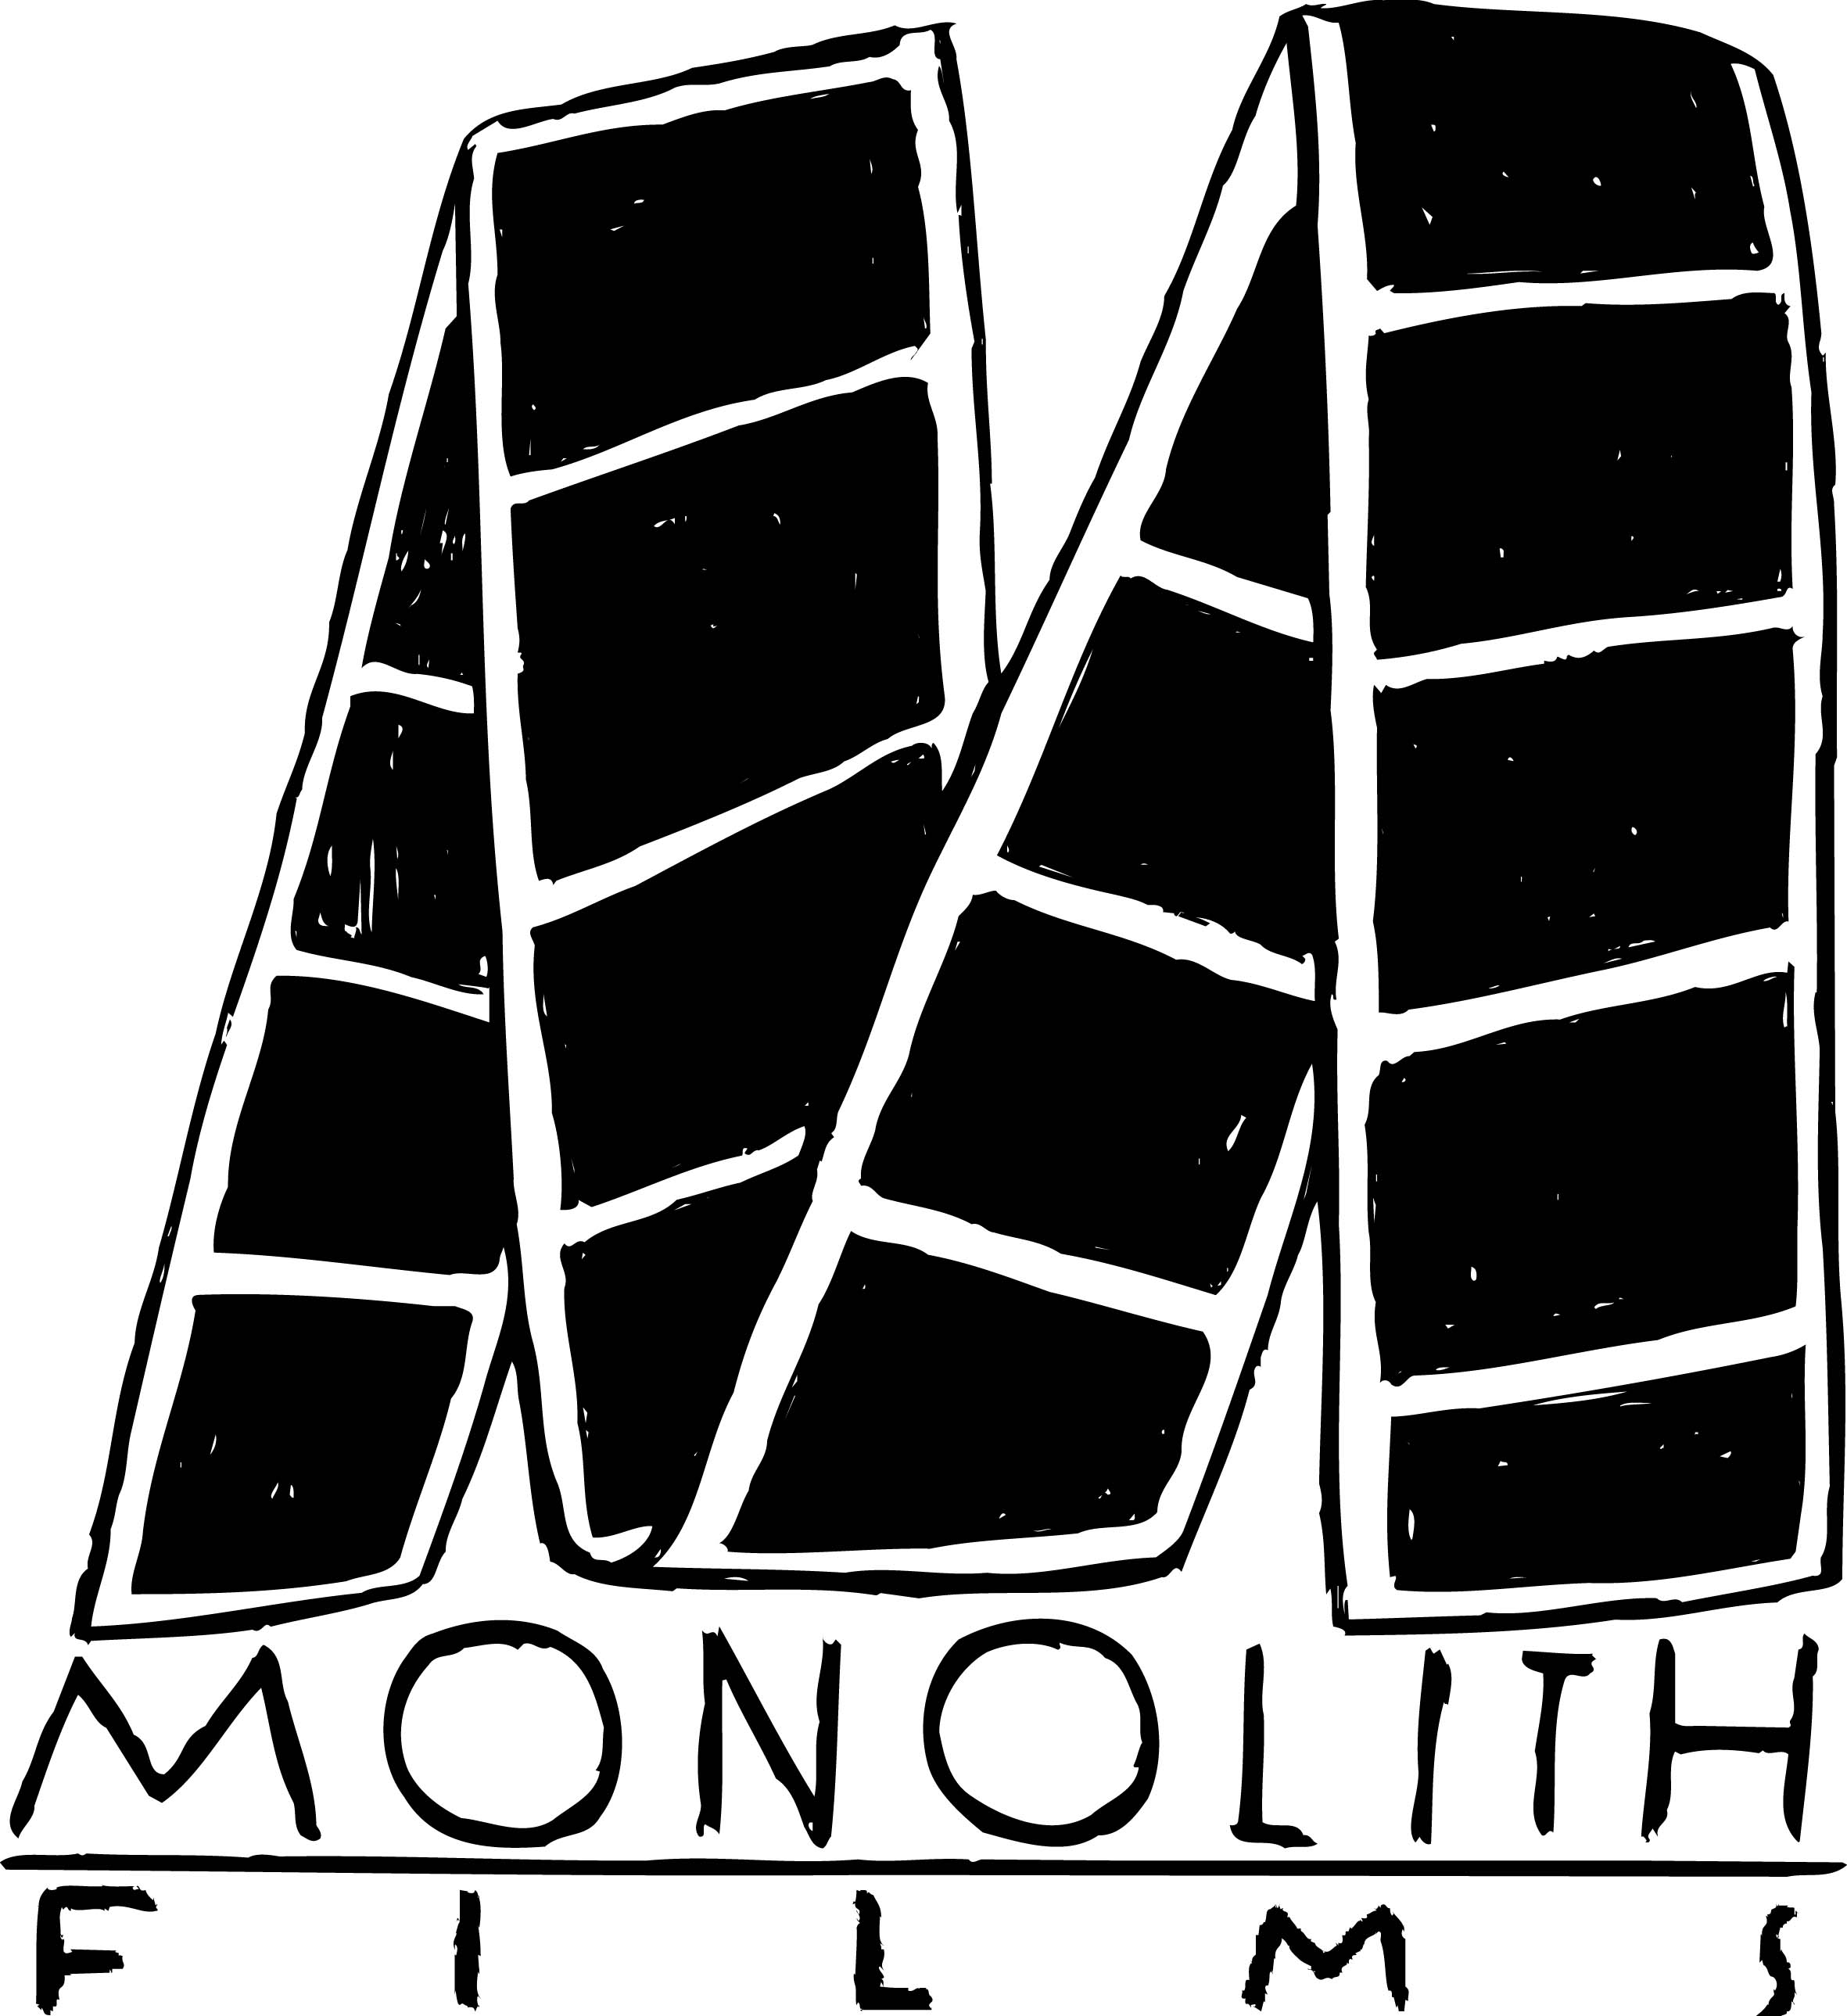 MONOLITH Films